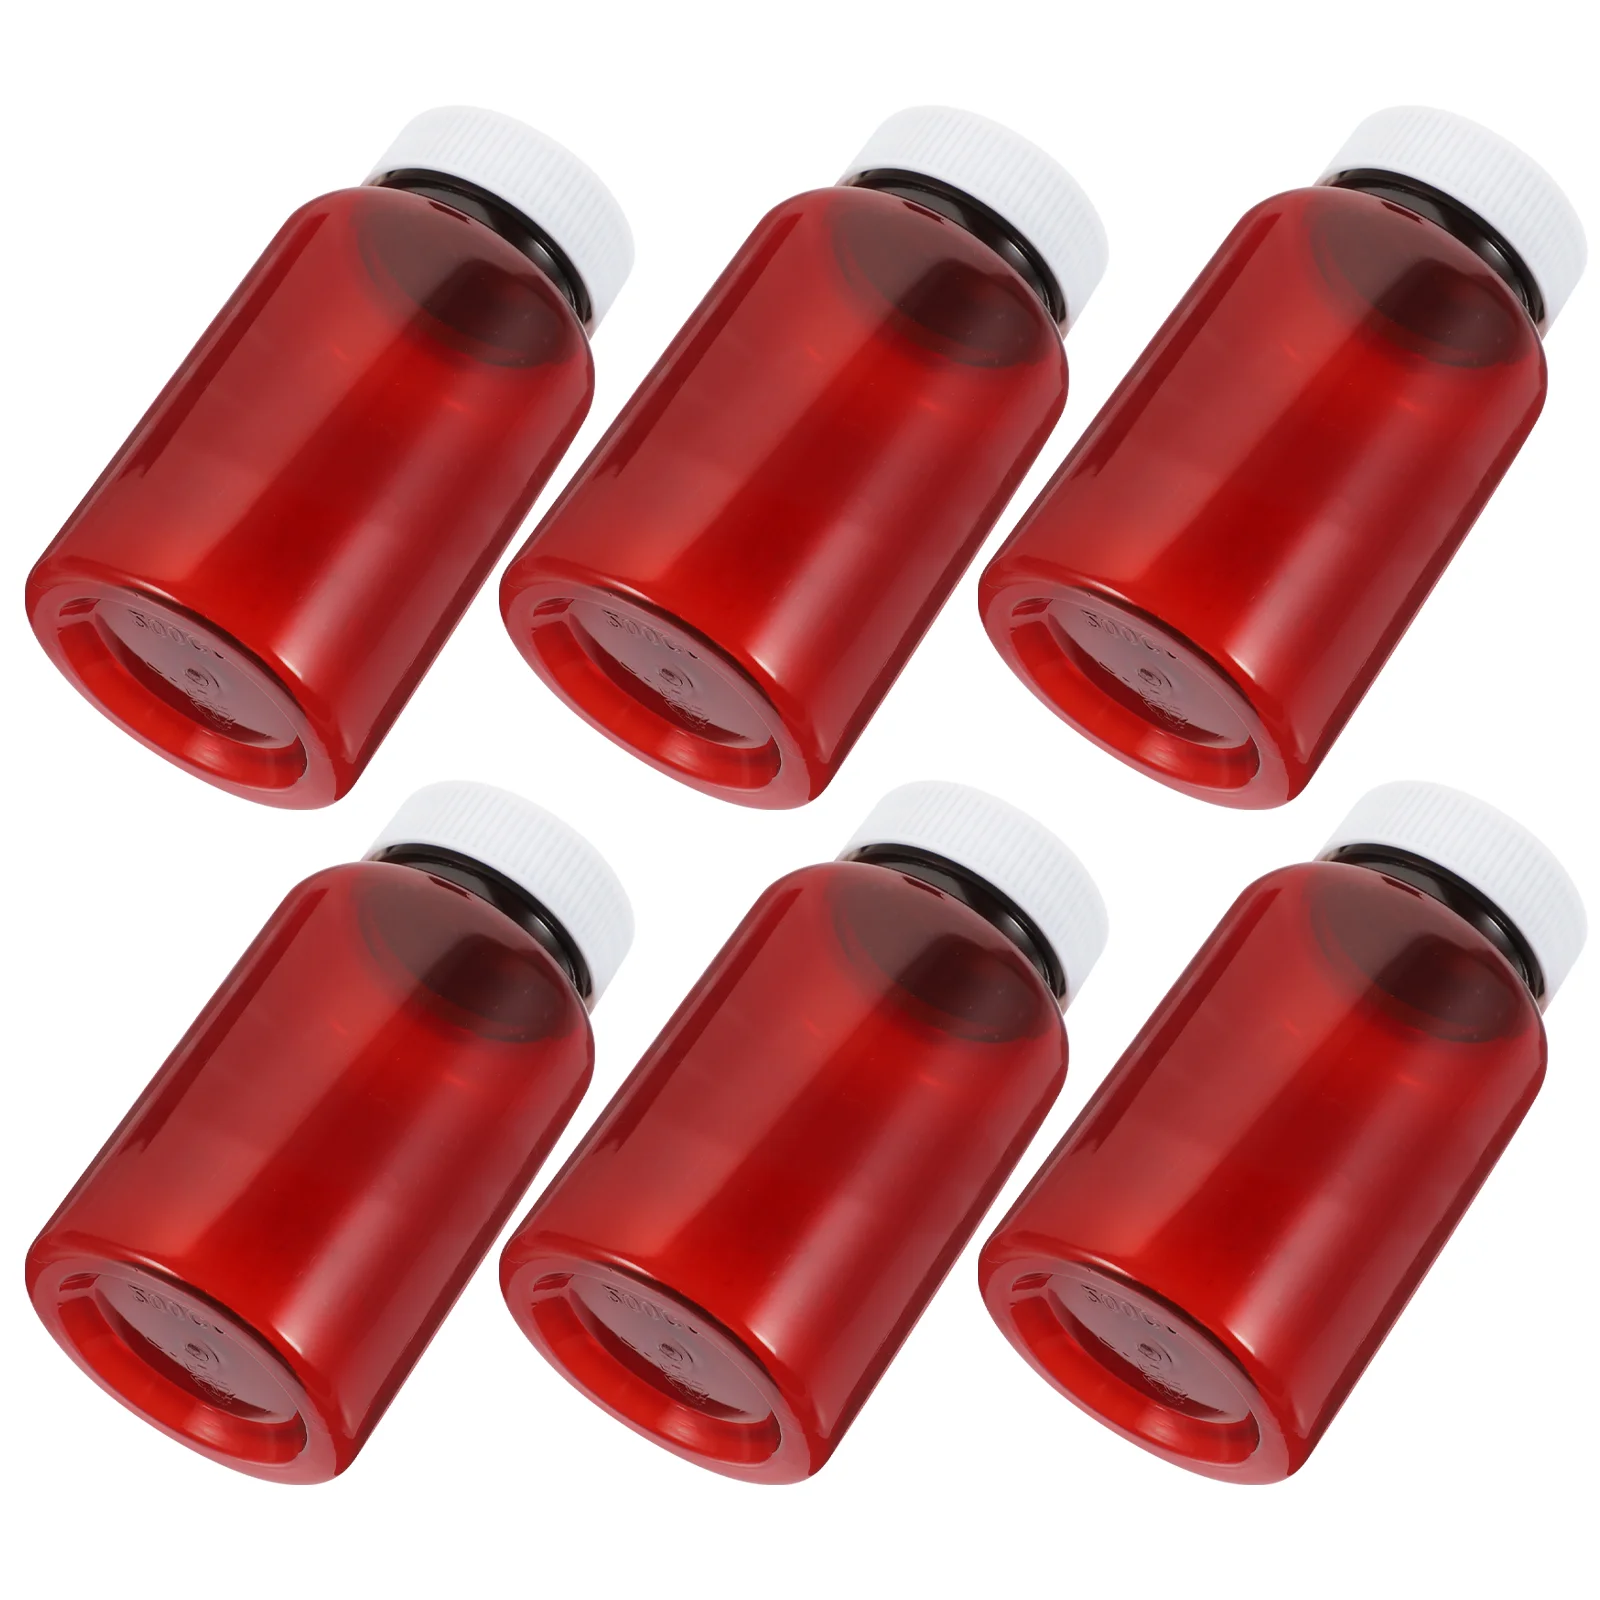 

6 Pcs Medicine Storage Accessories Empty Plastic Container Pill Bottles with Caps Dispenser Amber Pills The Pet Travel